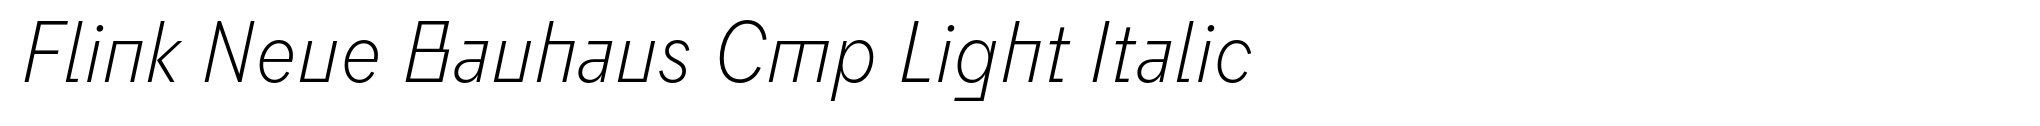 Flink Neue Bauhaus Cmp Light Italic image